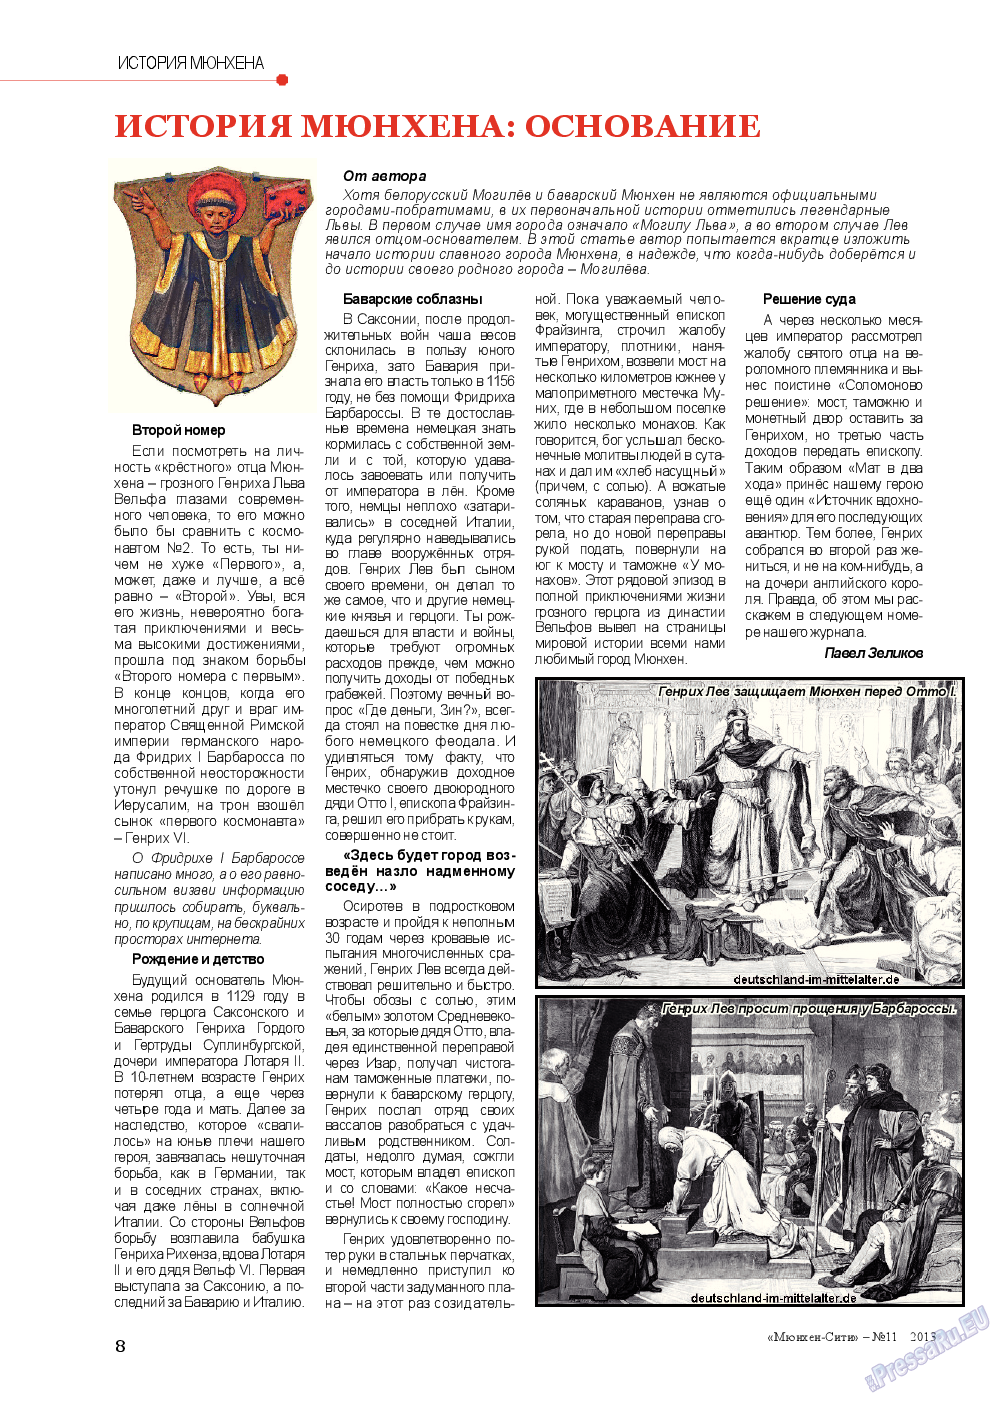 Мюнхен-сити, журнал. 2013 №11 стр.8